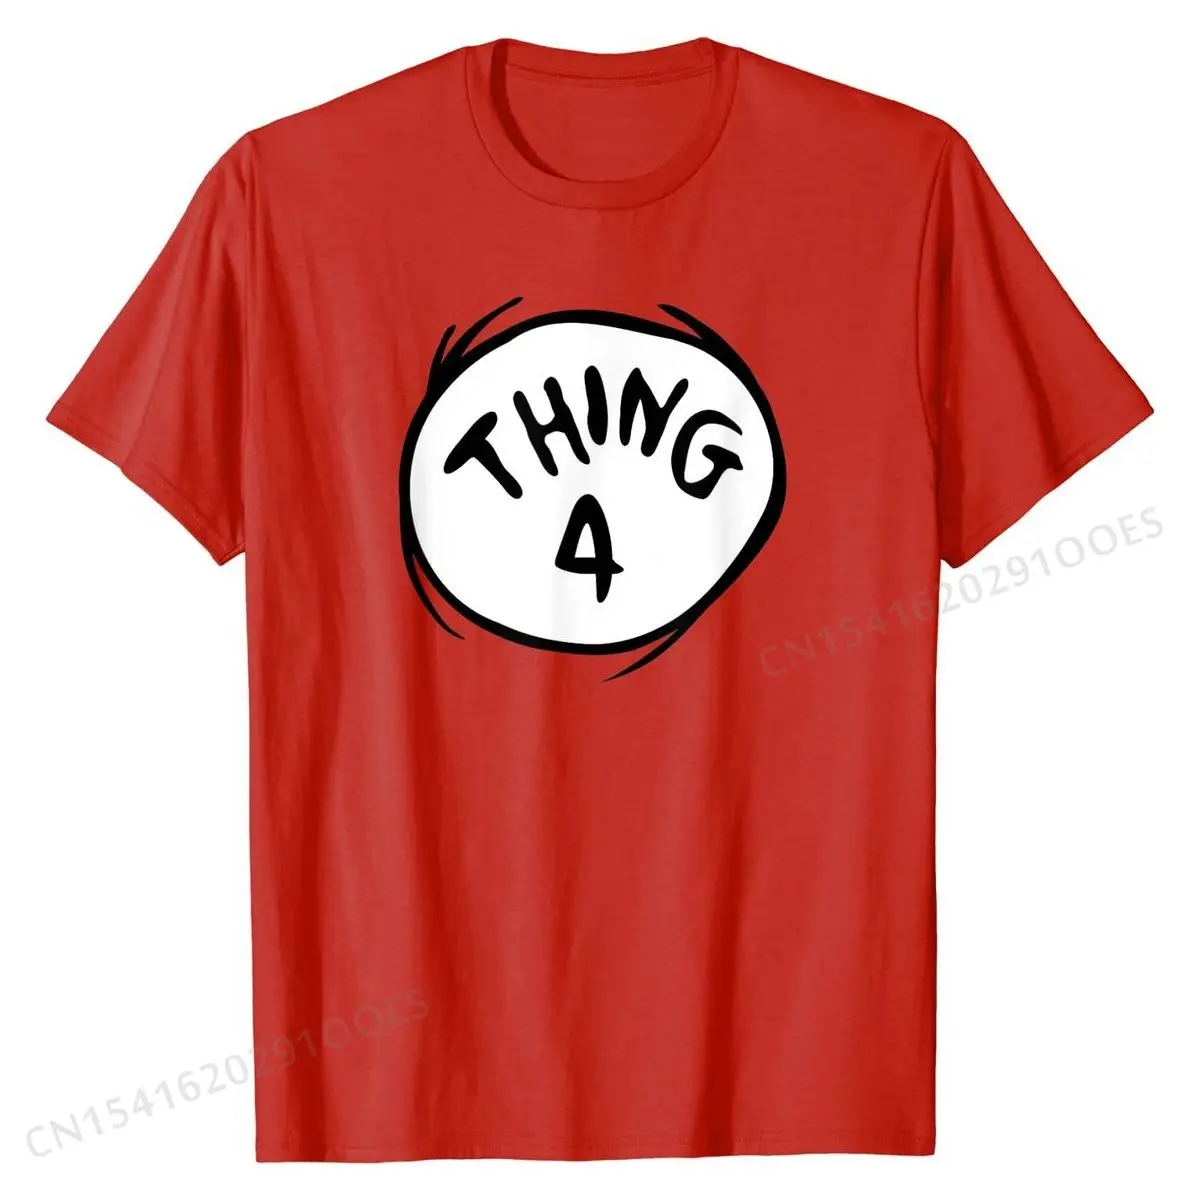 Thing 4 Emblem RED T-shirt Cotton Funny Tops Shirt Rife Men T Shirt Printed On